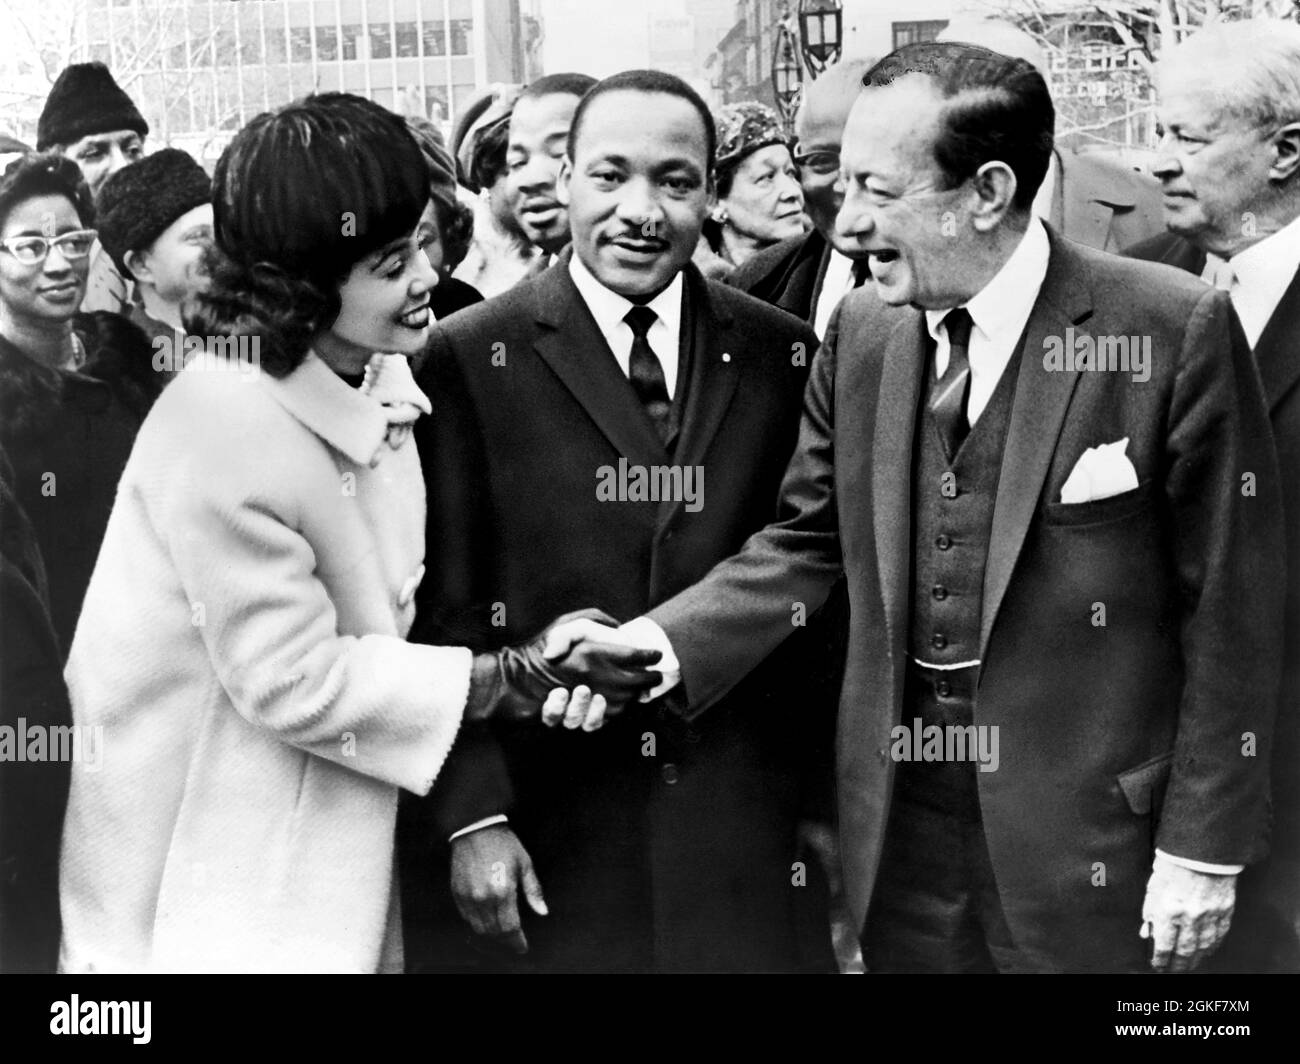 Dr. E Sig.ra Martin Luther King Jr., salutati dal sindaco di New York Robert Wagner, New York City, New York, USA, Phil Stanziola, New York World-Telegram & Sun Photo Collection, 1964 Foto Stock